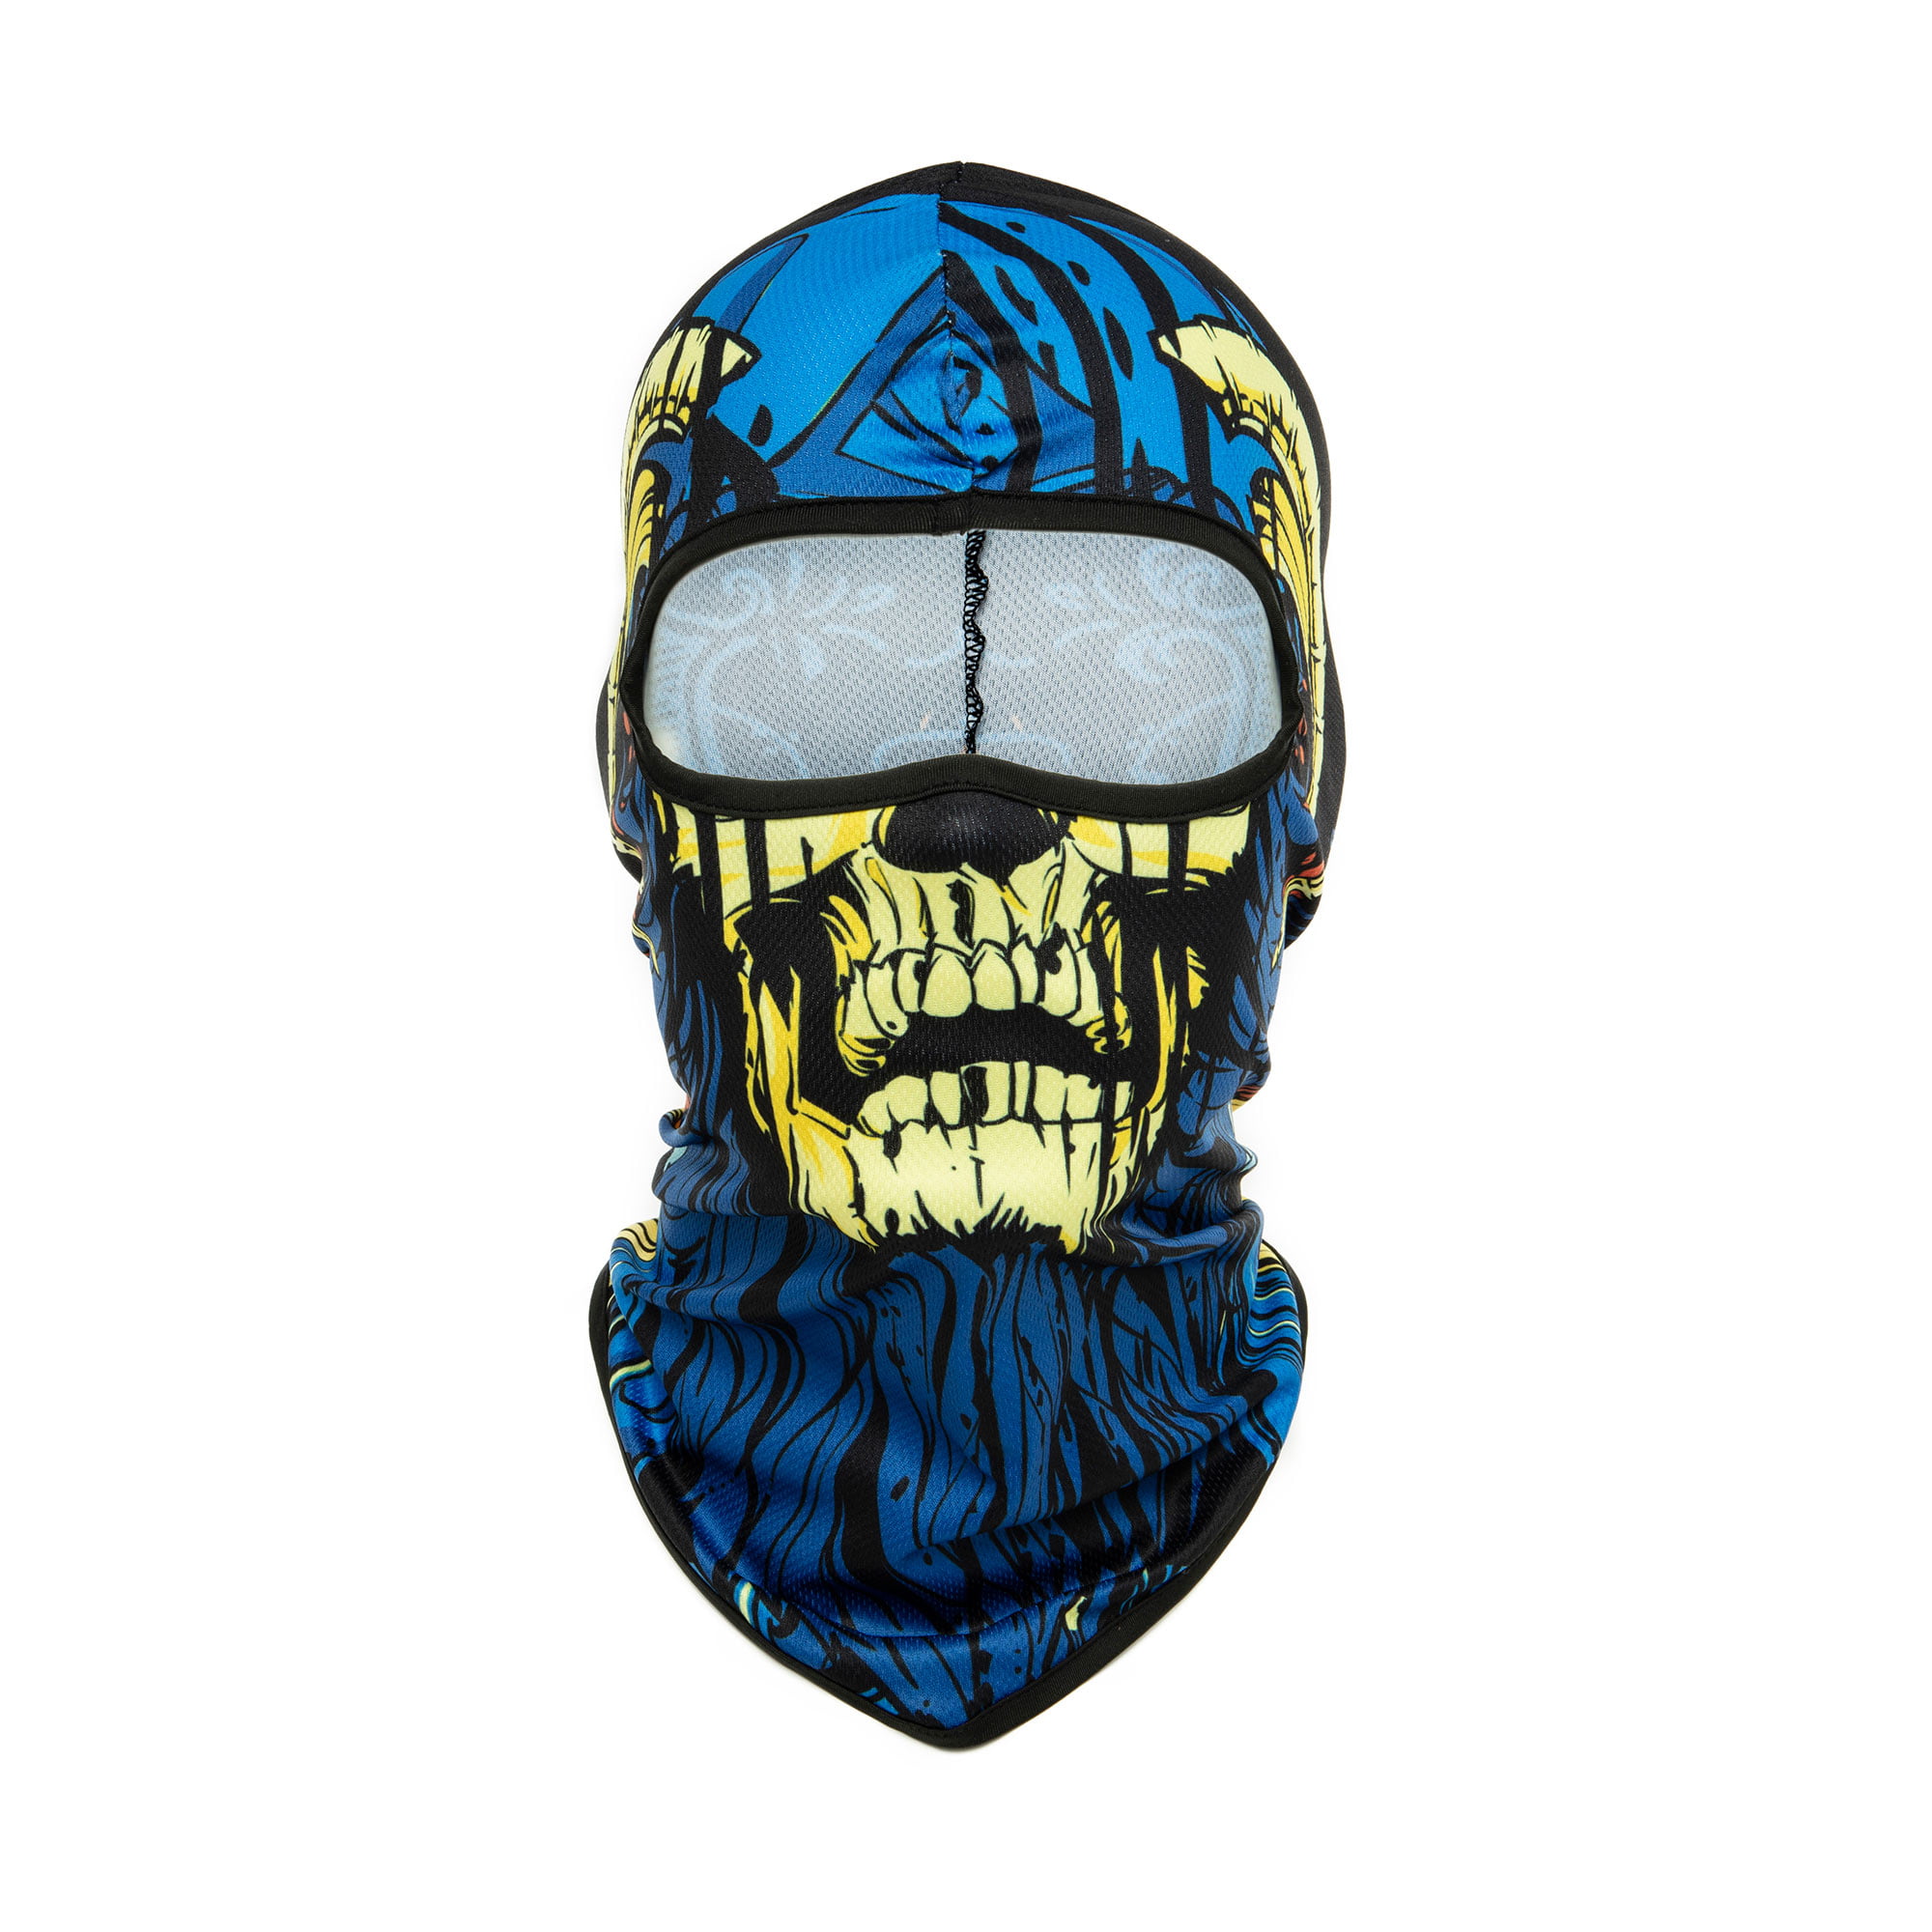 Headbands Digital Art Headwear Bandana Sweatband Gaiter Head Wrap Mask Neck Outdoor Scarf